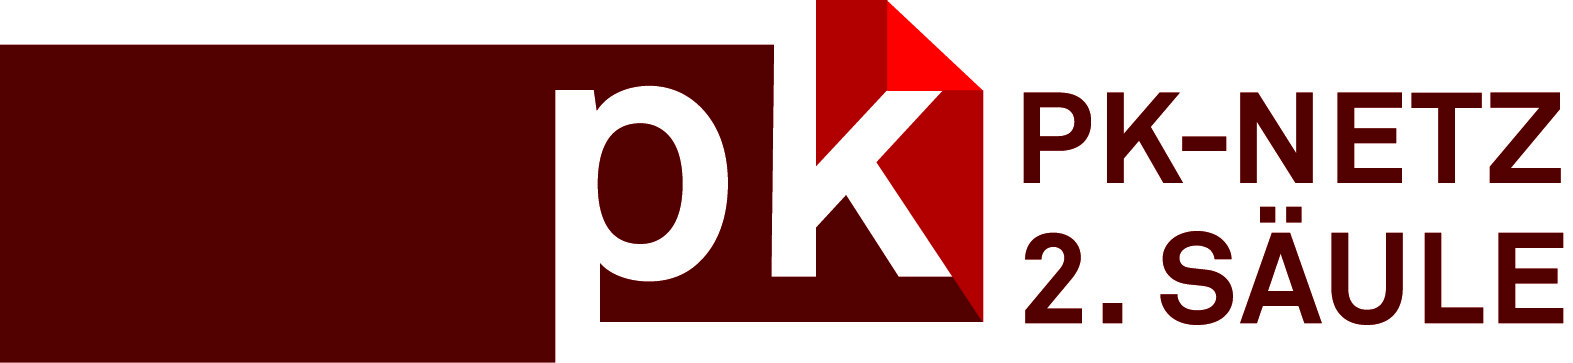 00_pk-netz_logo